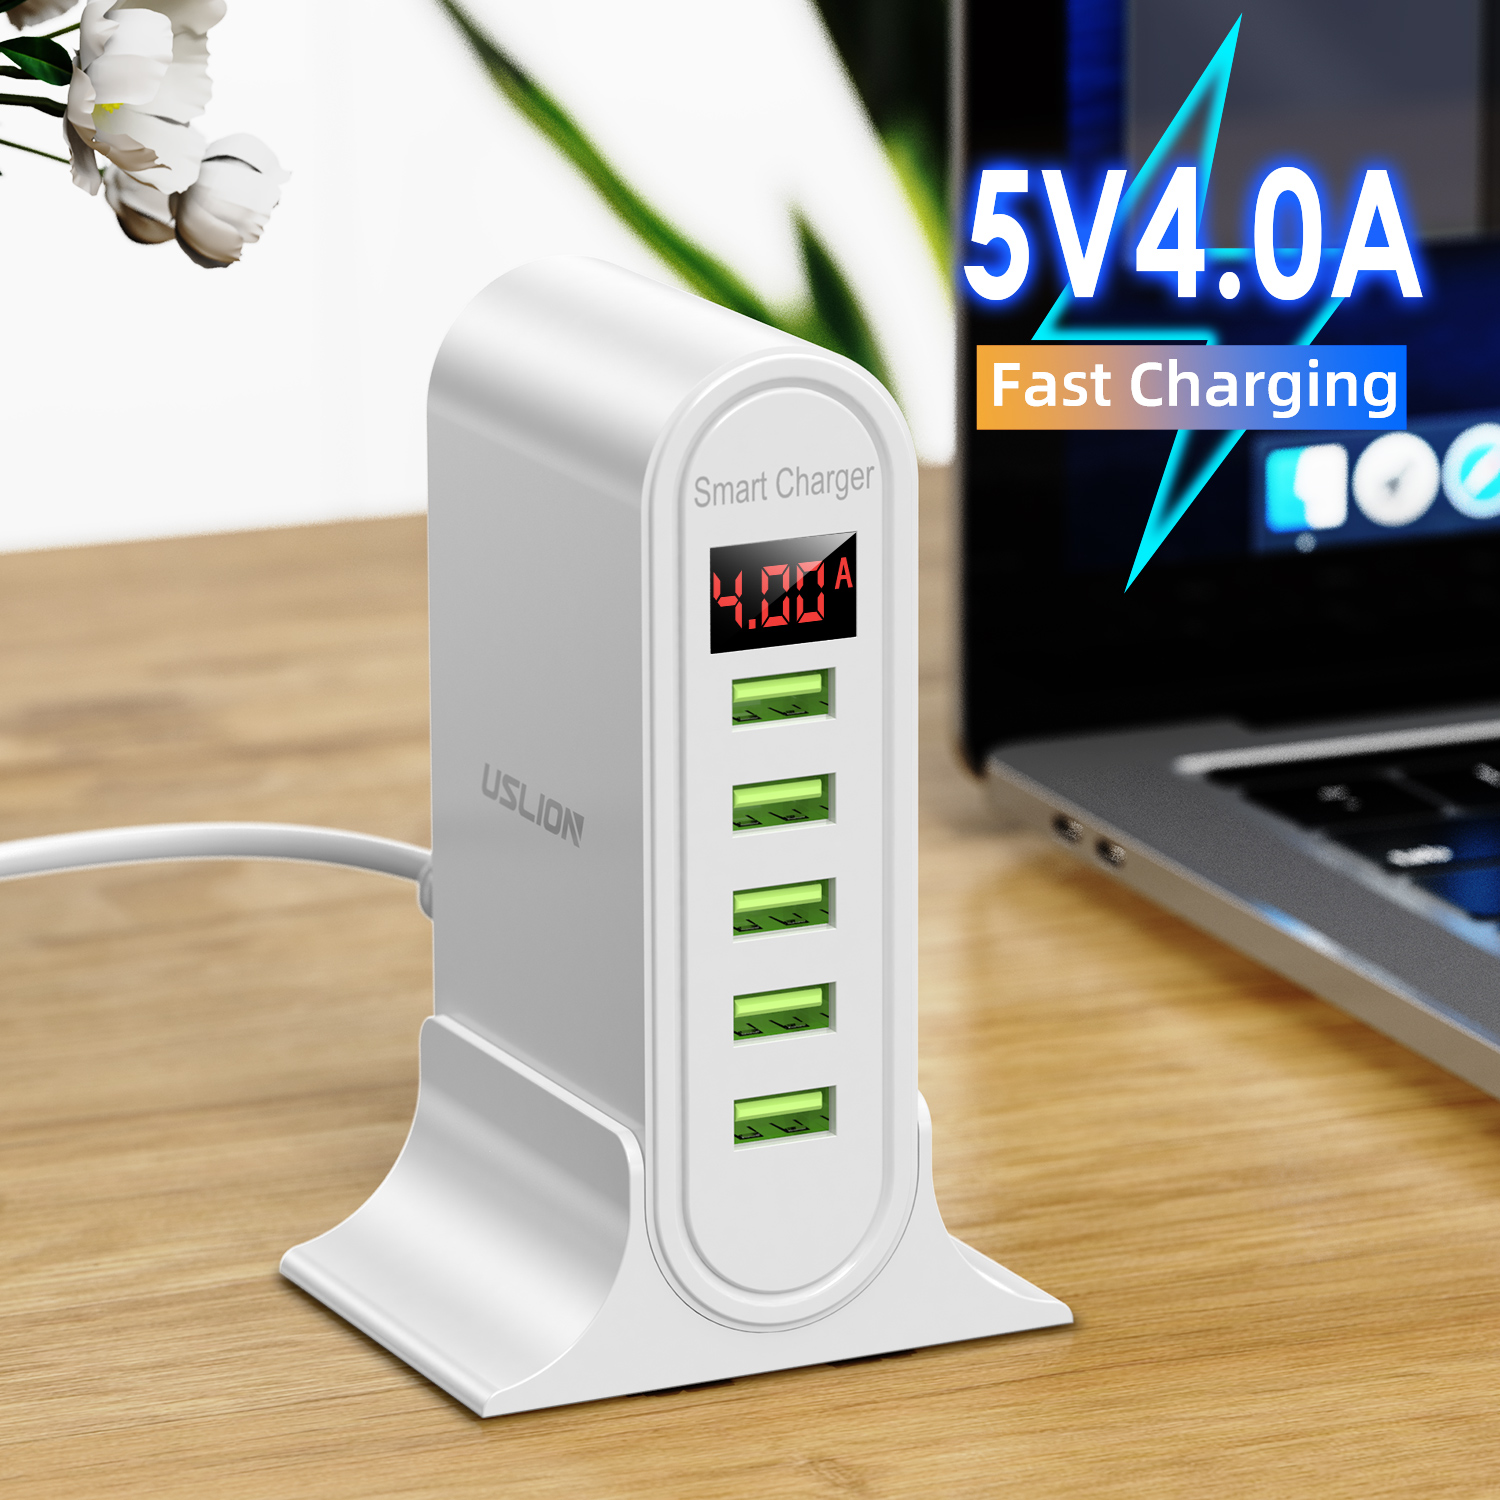 Yifang [Fastชาร์จ] 5-Port USBโทรศัพท์มือถือCharger Fast USB HUBแท่นชาร์จTravel Smart LED Digital DISPLAY EUปลั๊กอเมริกันอังกฤษ